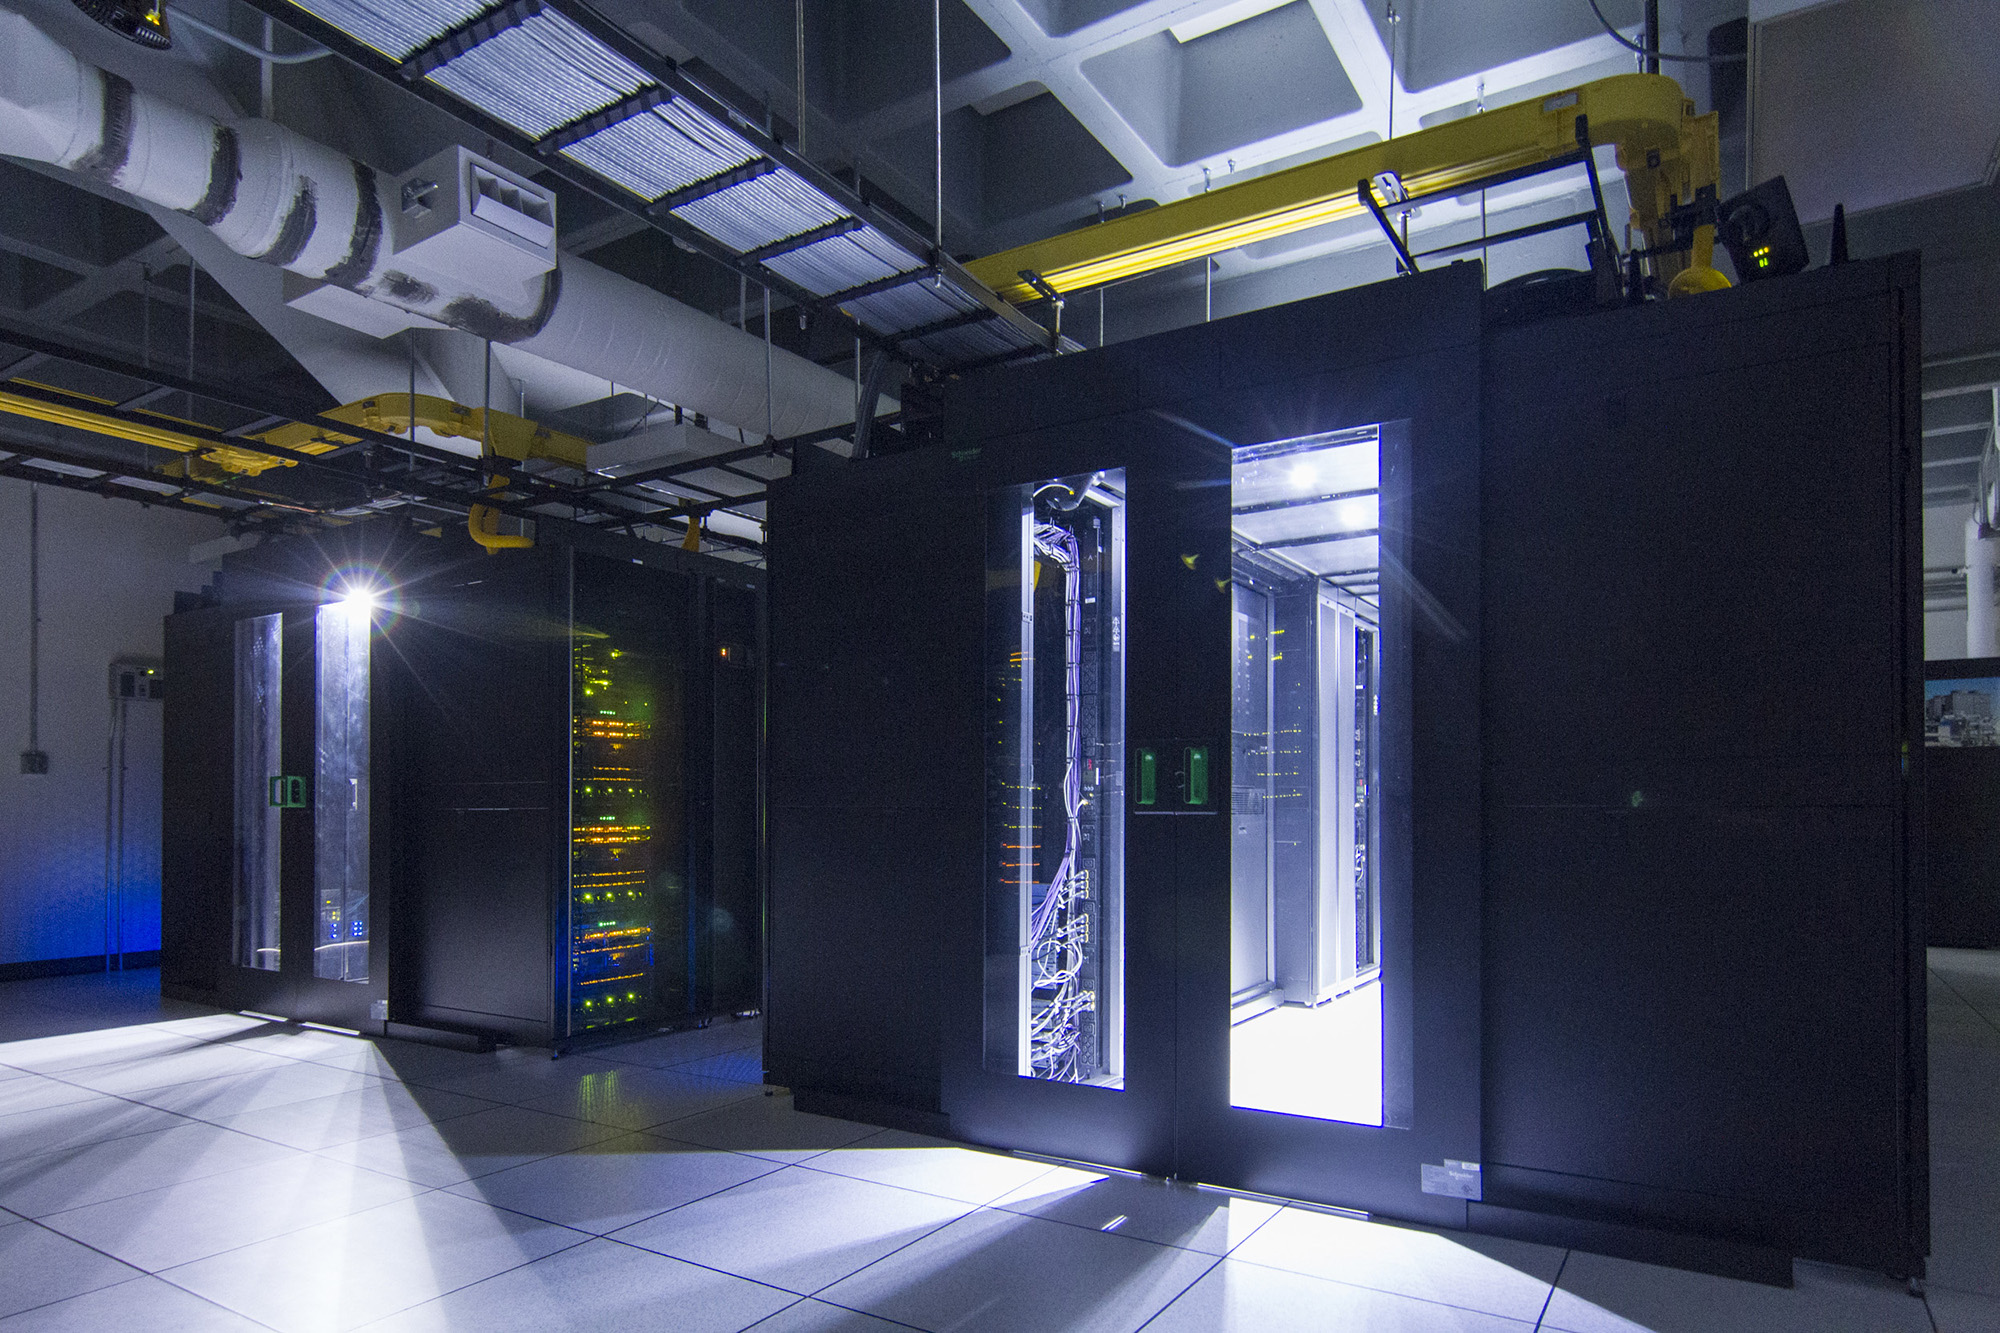 U-N-L-V data center illuminated by only network equipment.